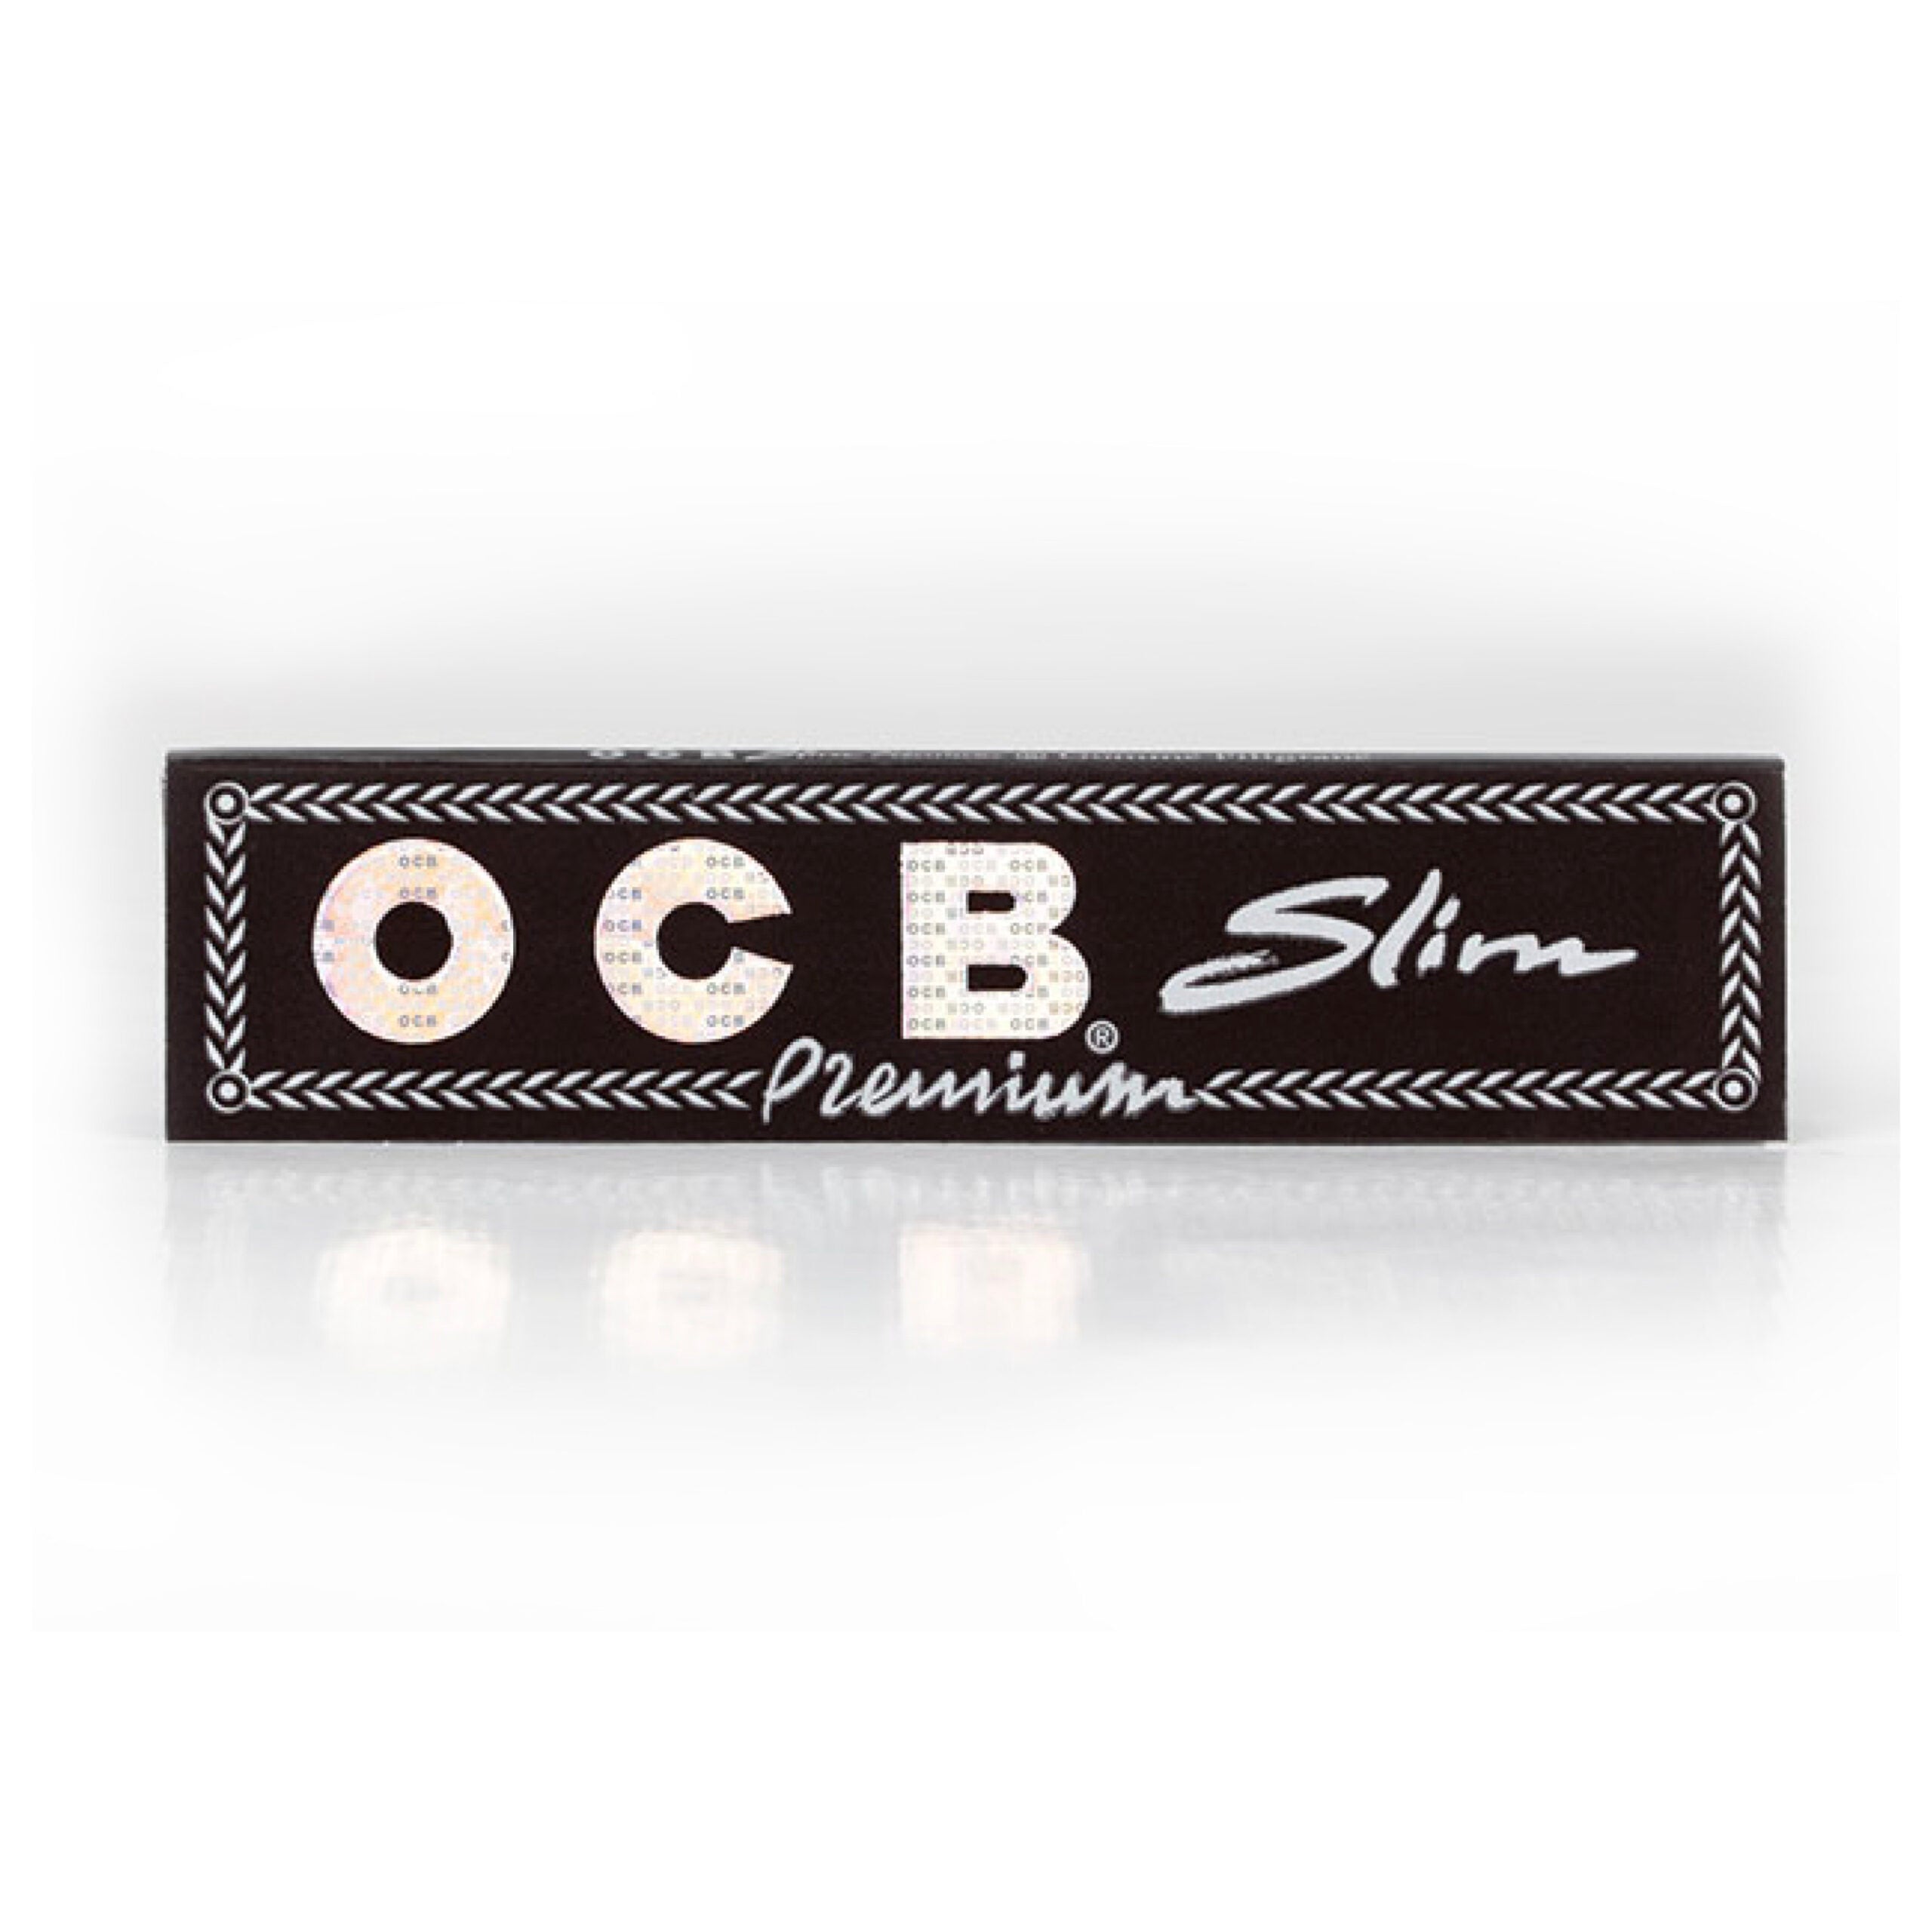 OCB Unbleached Pre-Roll Paper - King Slim